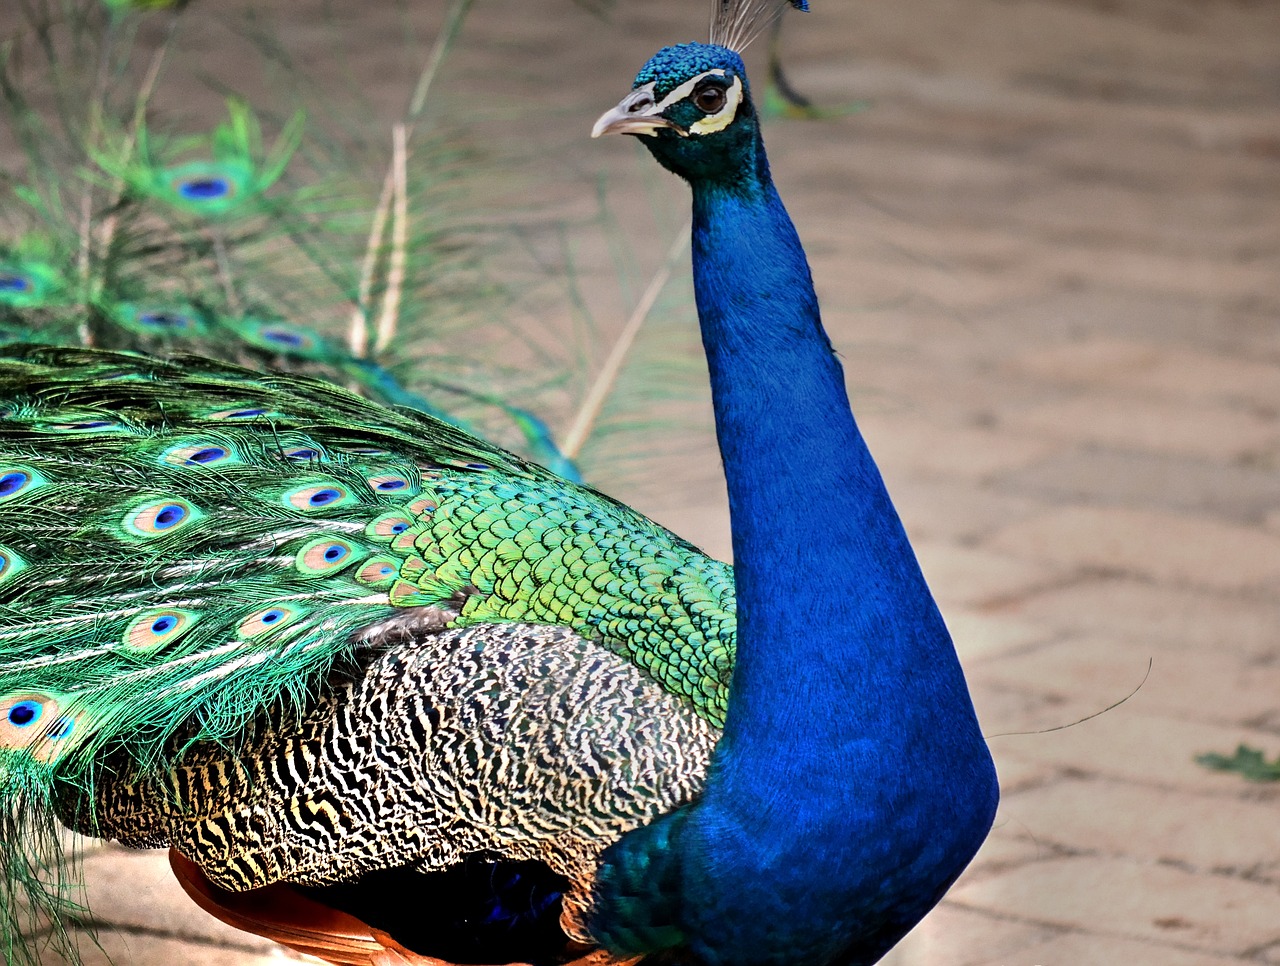 peacock colourful bird free photo